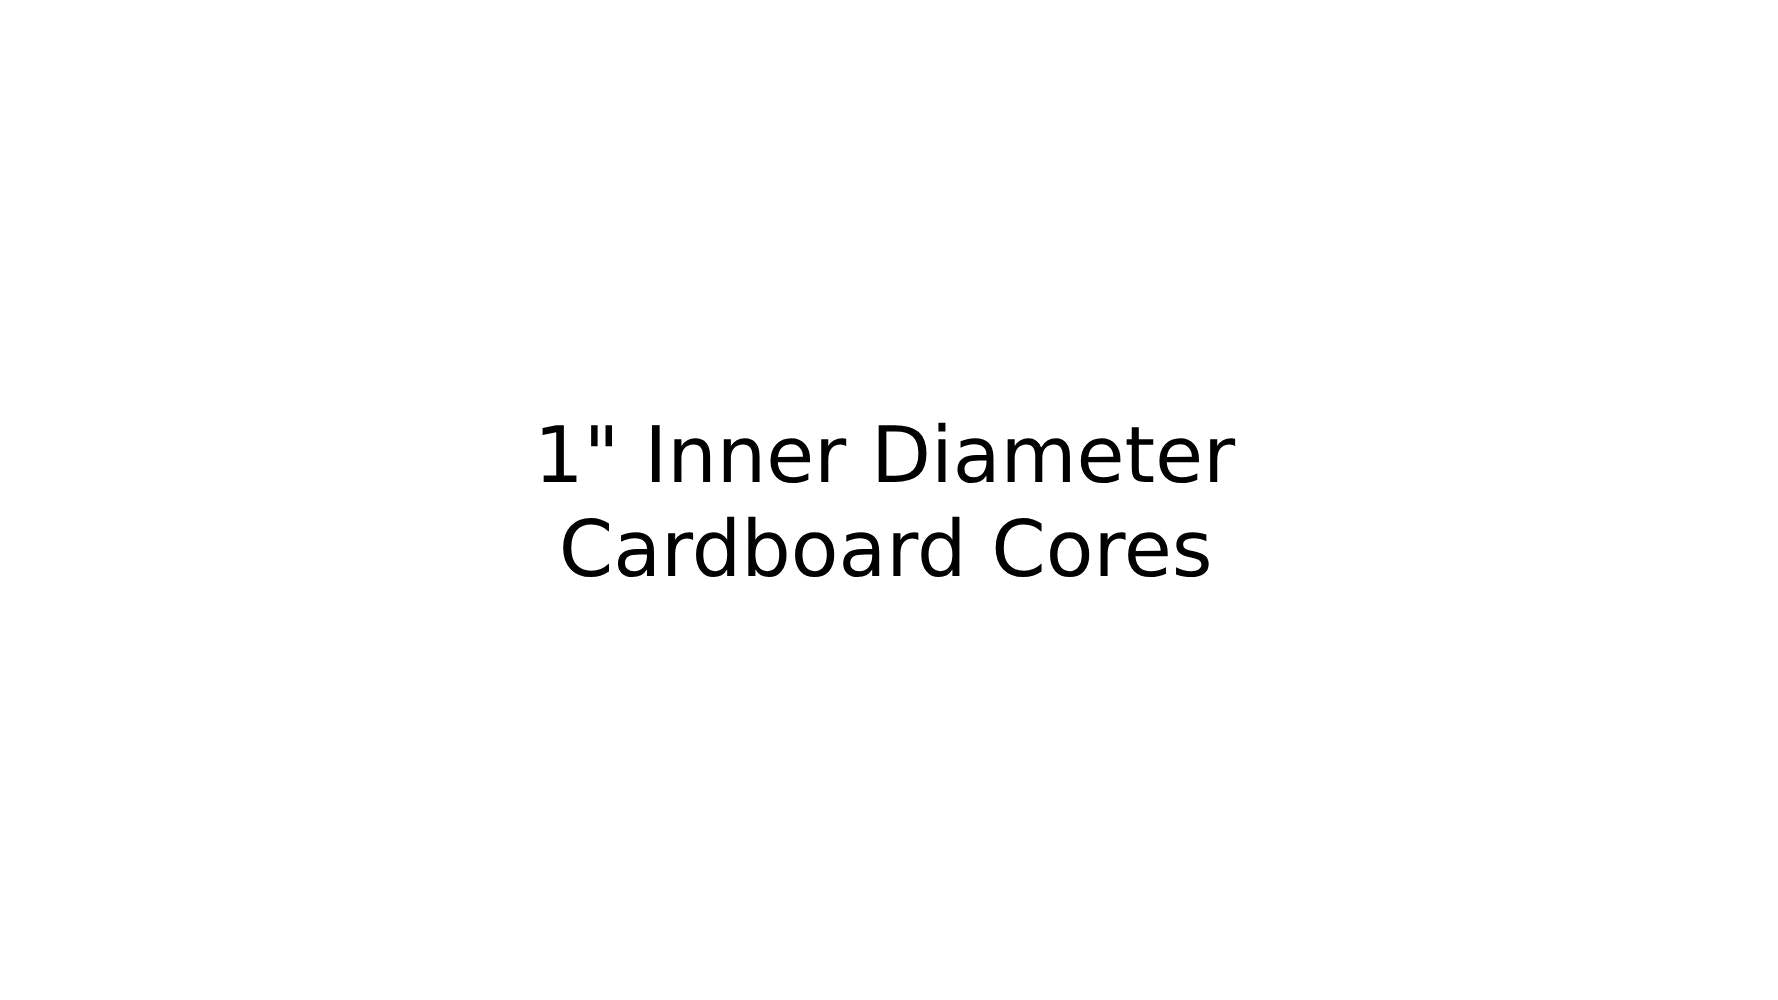 Cardboard Cores - 1", 2", or 3" Inner Diameter-Cardboard Core-CardBoardCore